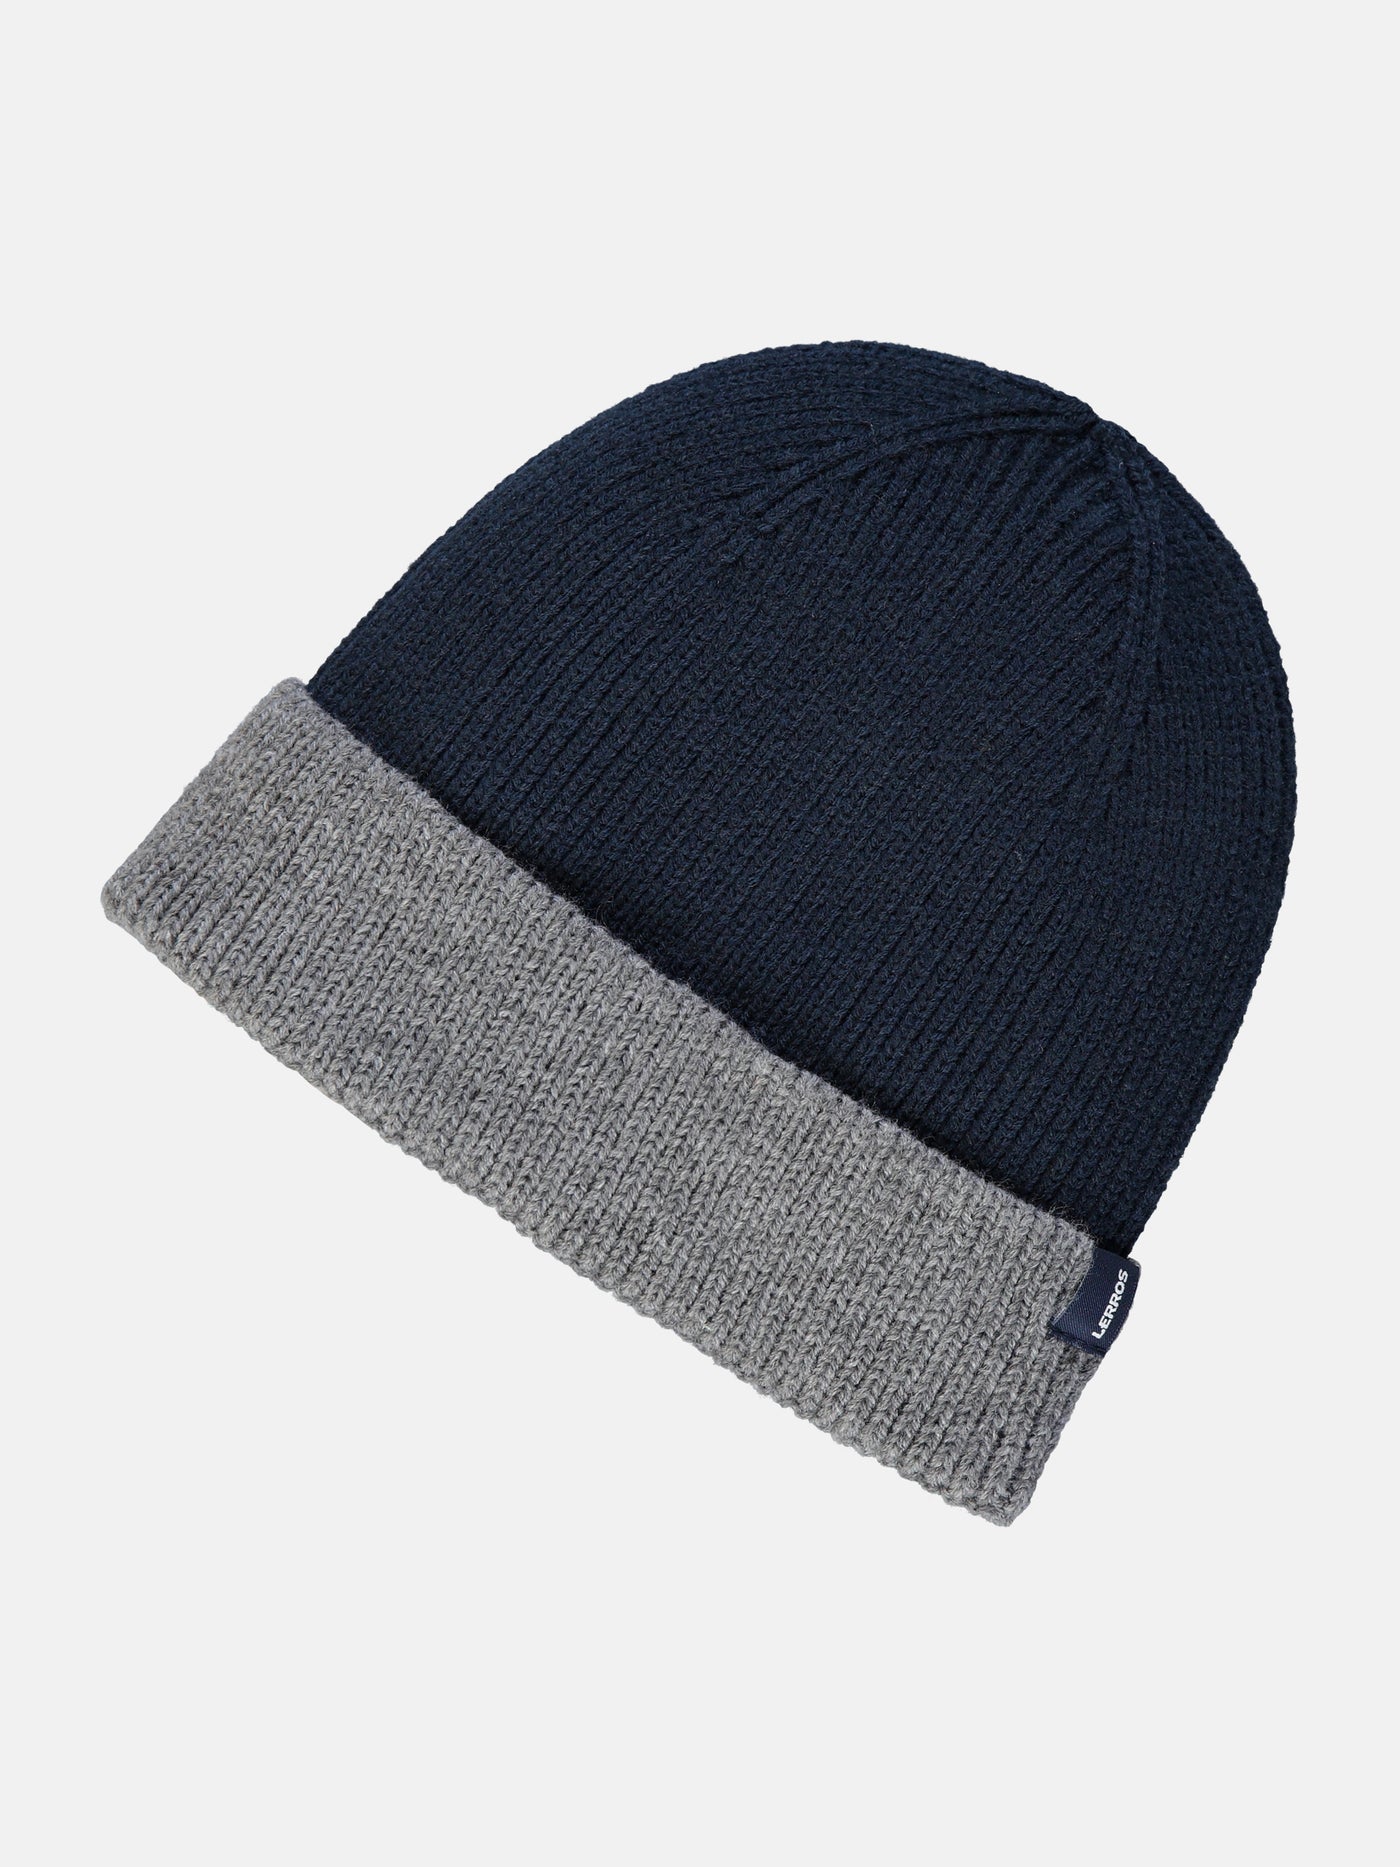 Basic knit hat. two-tone